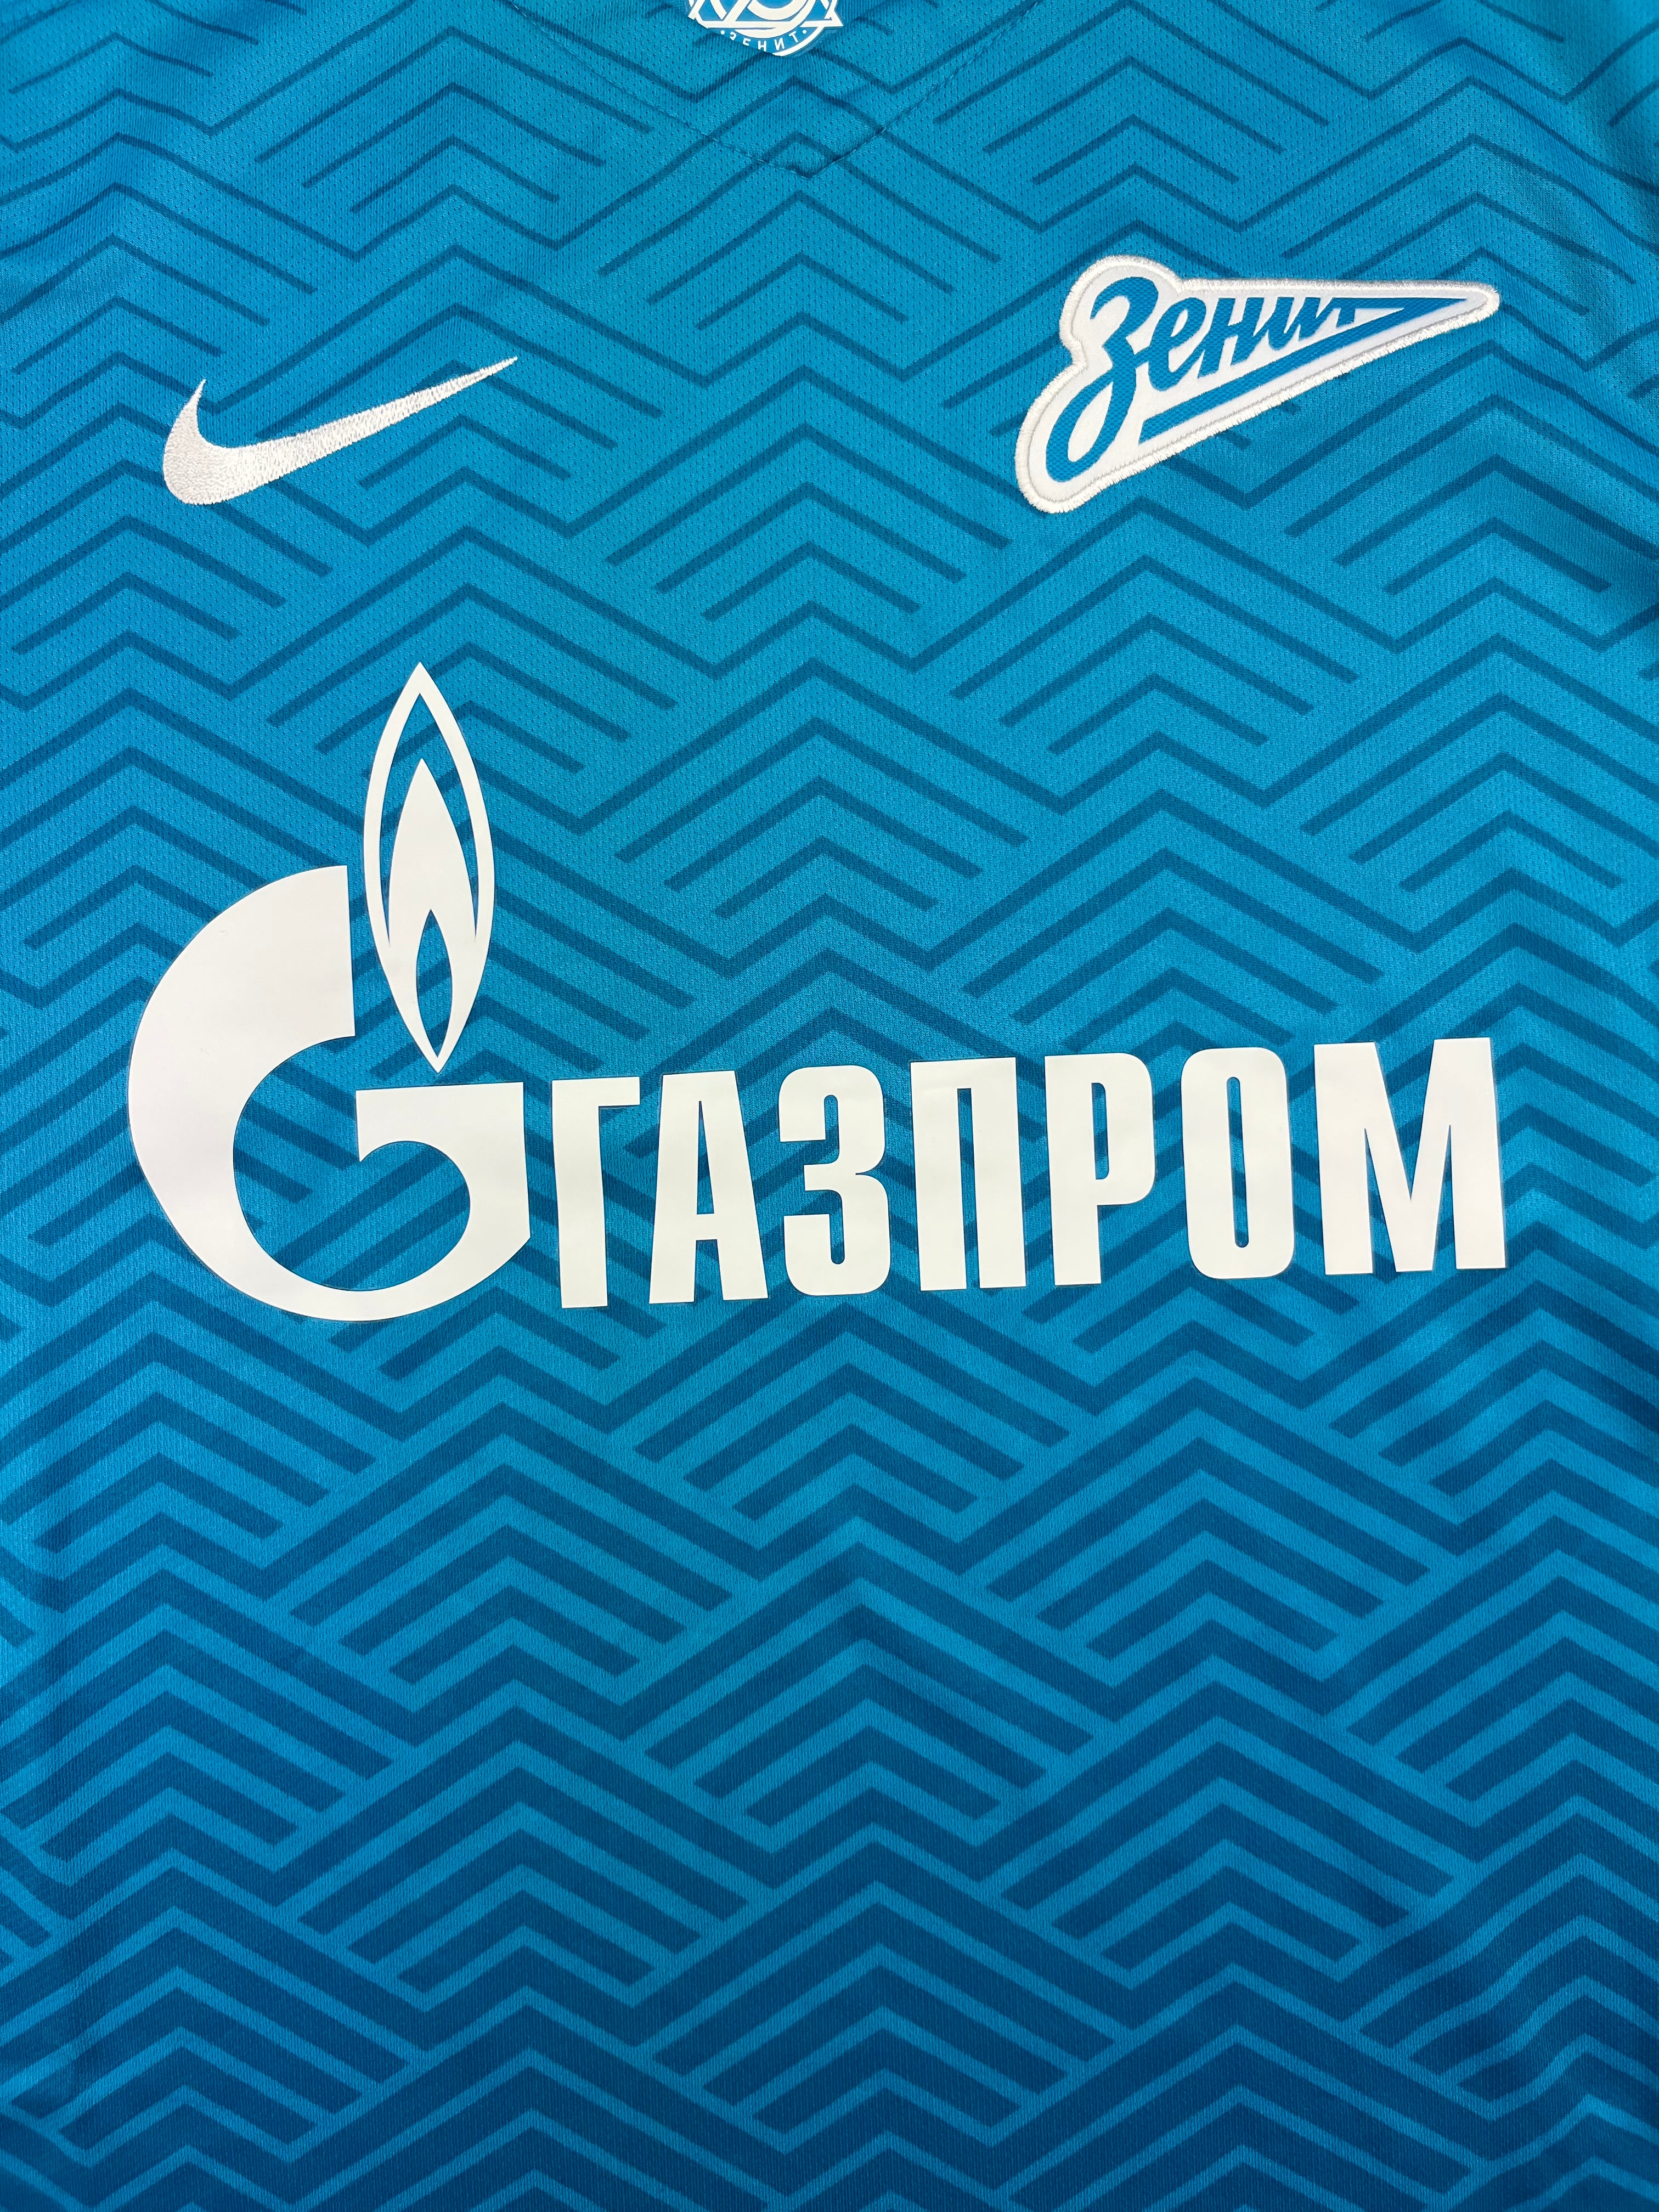 2015/16 Zenit St Petersburg Home Shirt (S) 9.5/10